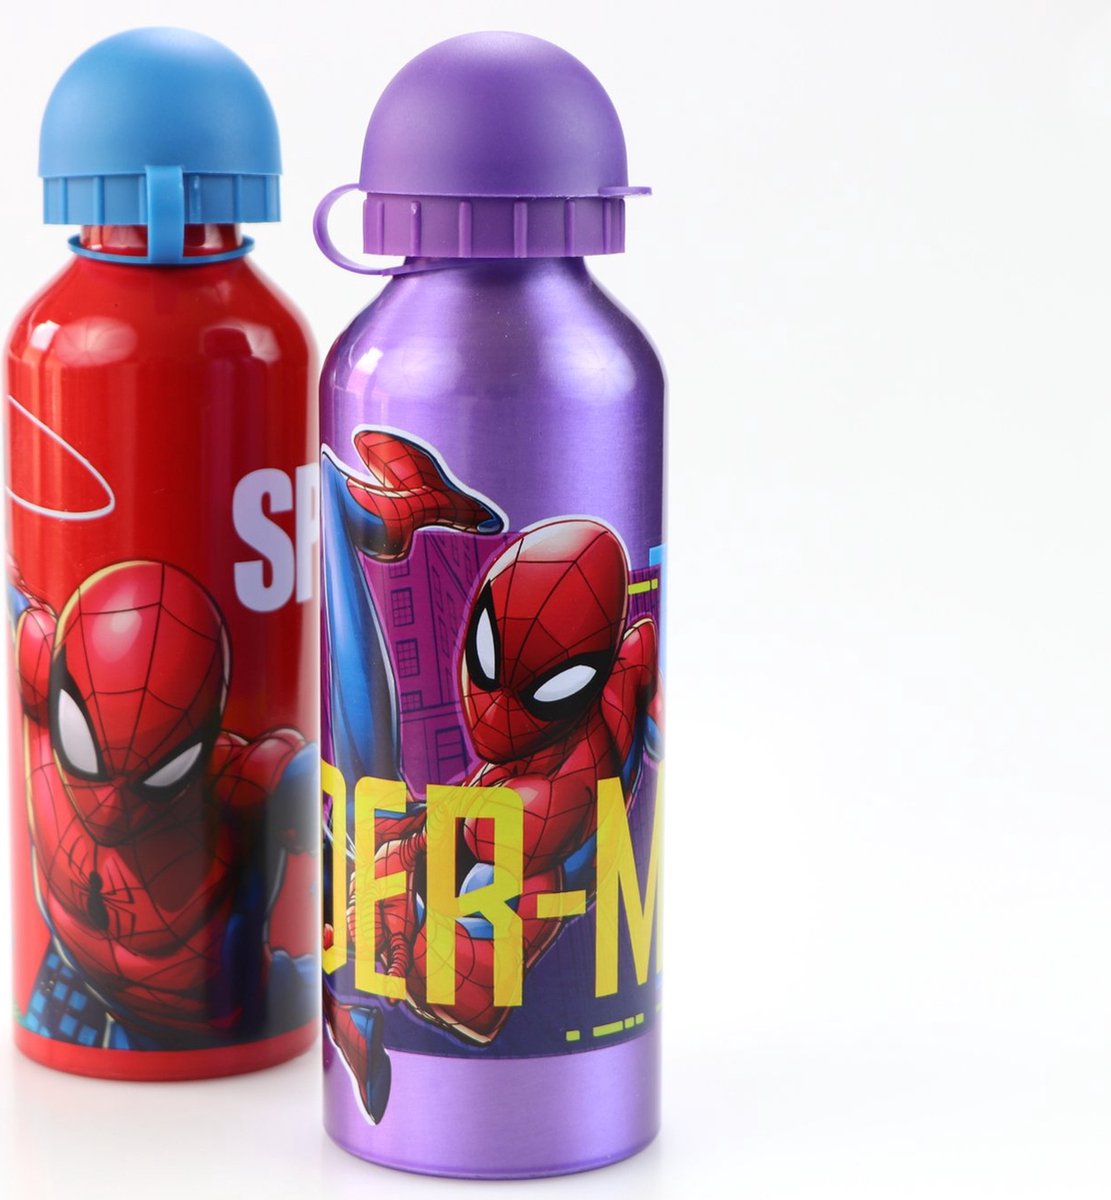 Gourde/gobelet/bouteille Marvel Spiderman avec bec verseur - bleu -  aluminium - 600 ml